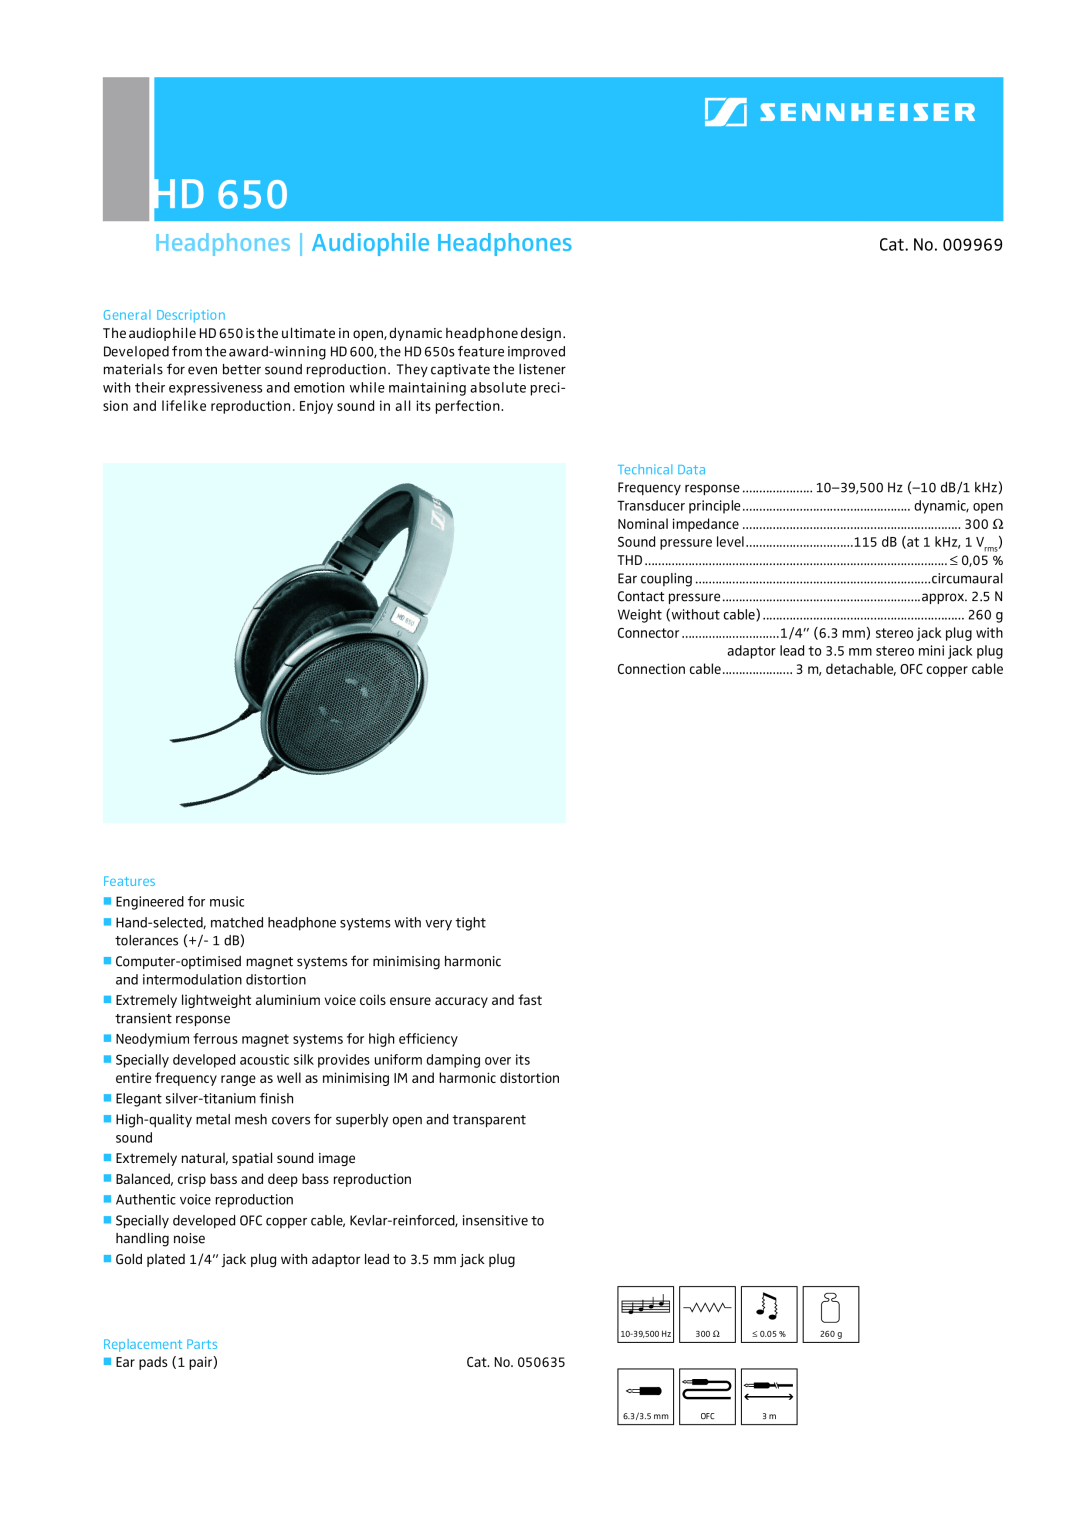 Sennheiser HD 650 manual Headphones Audiophile Headphones, Cat. No, General Description, Features, Technical Data 